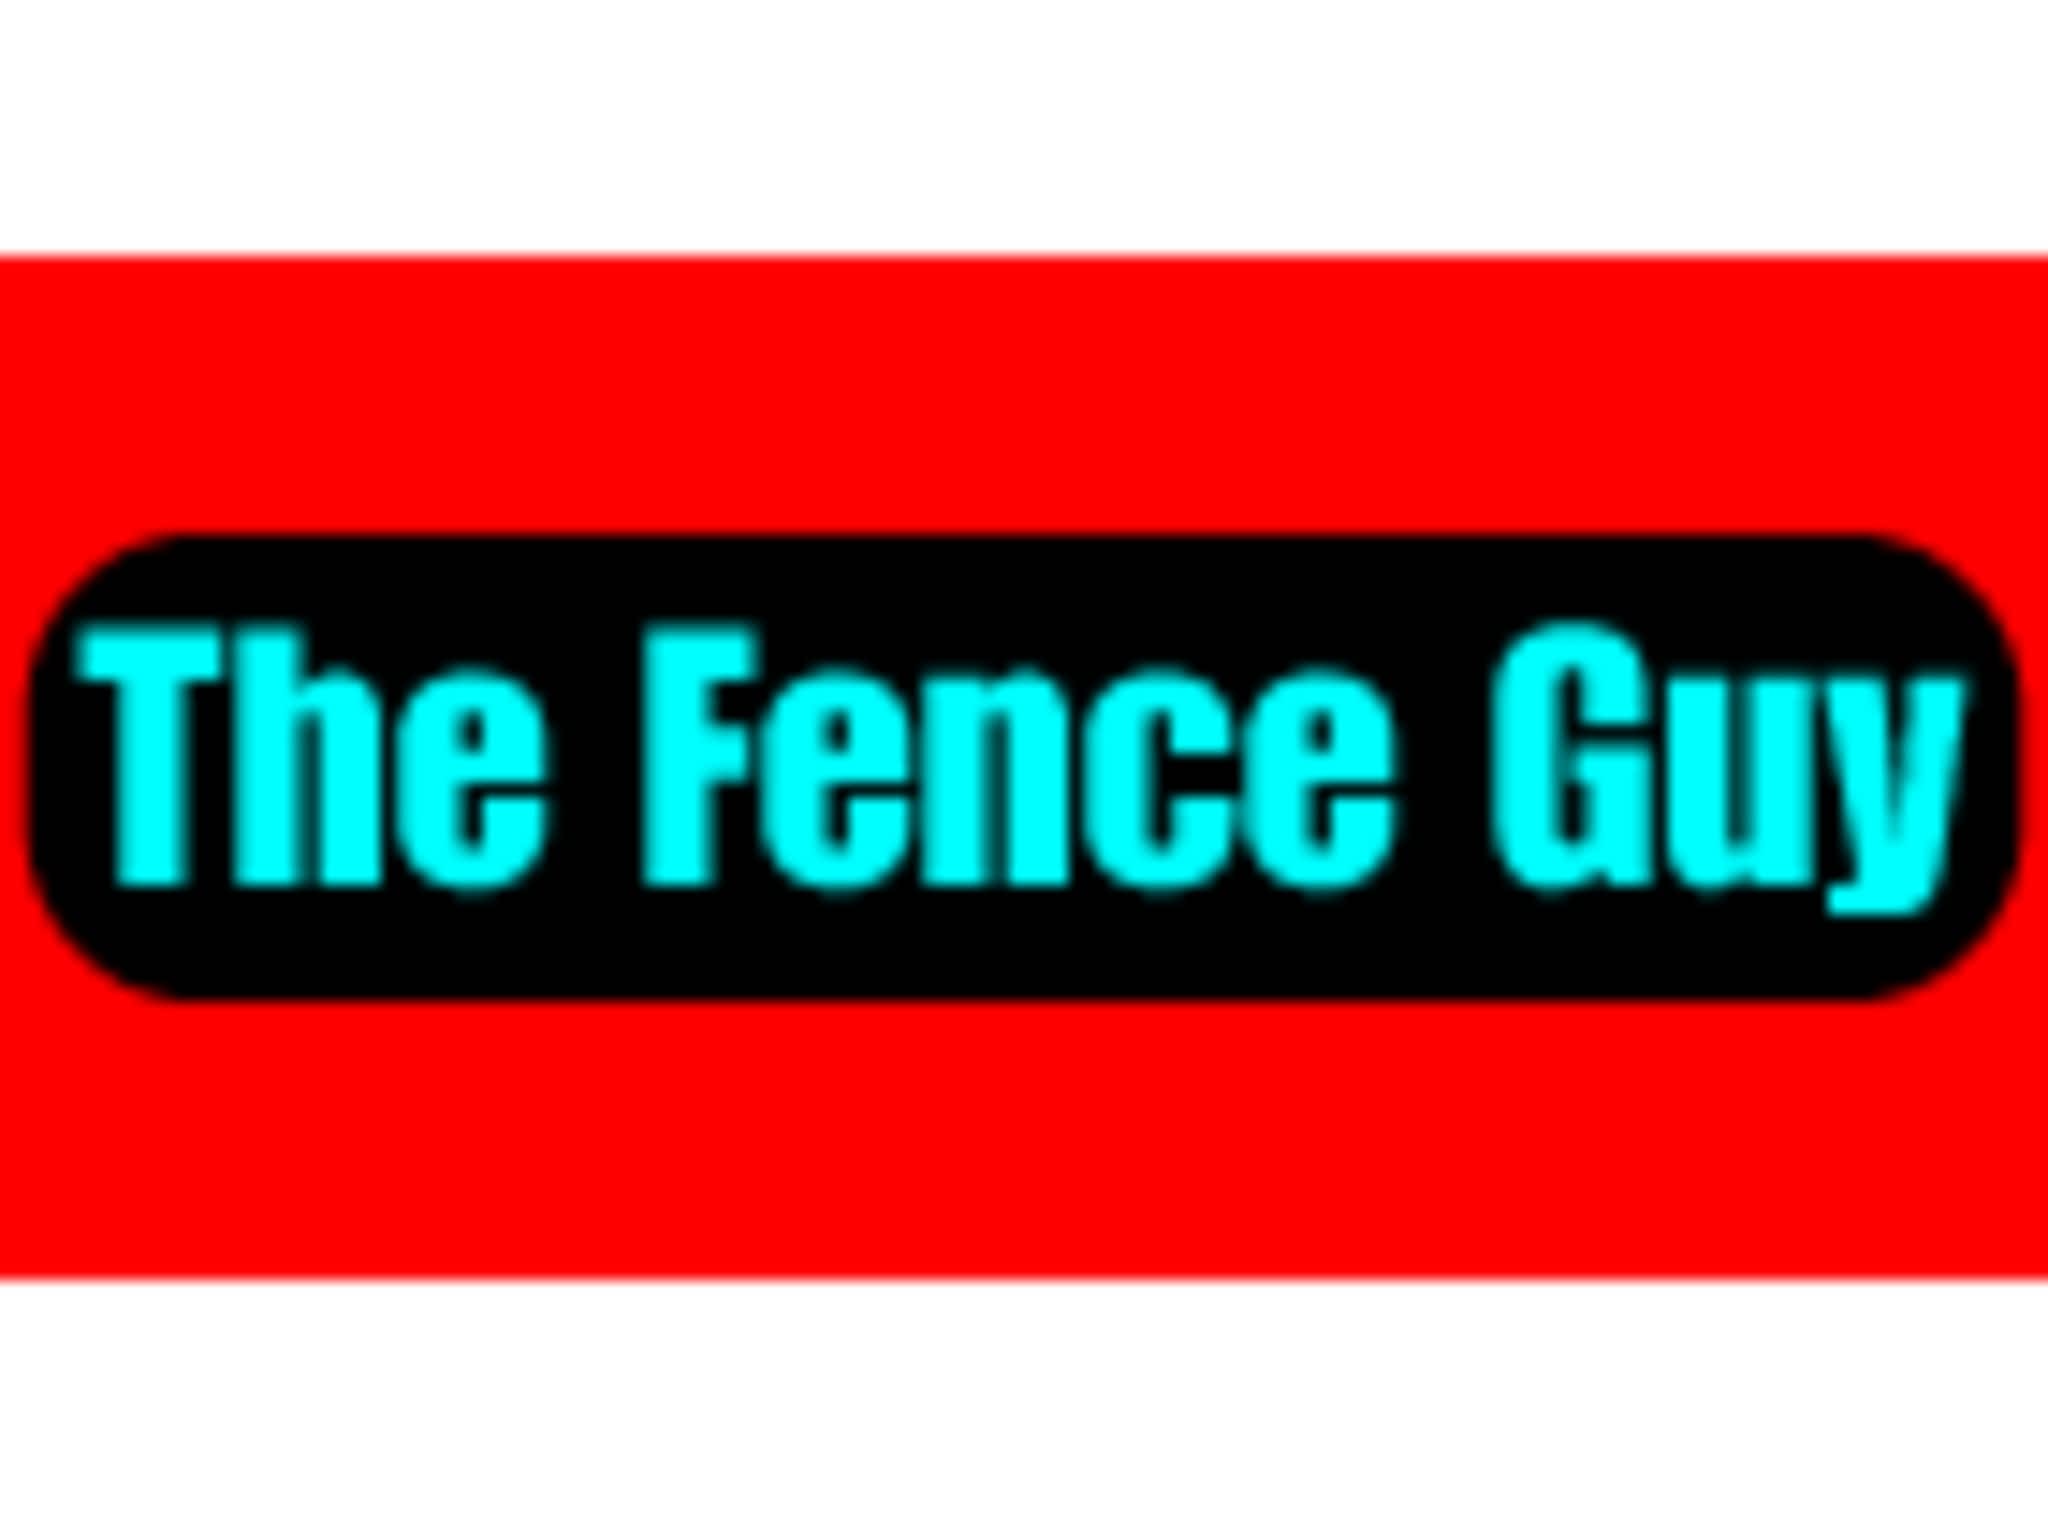 photo The Fence Guy